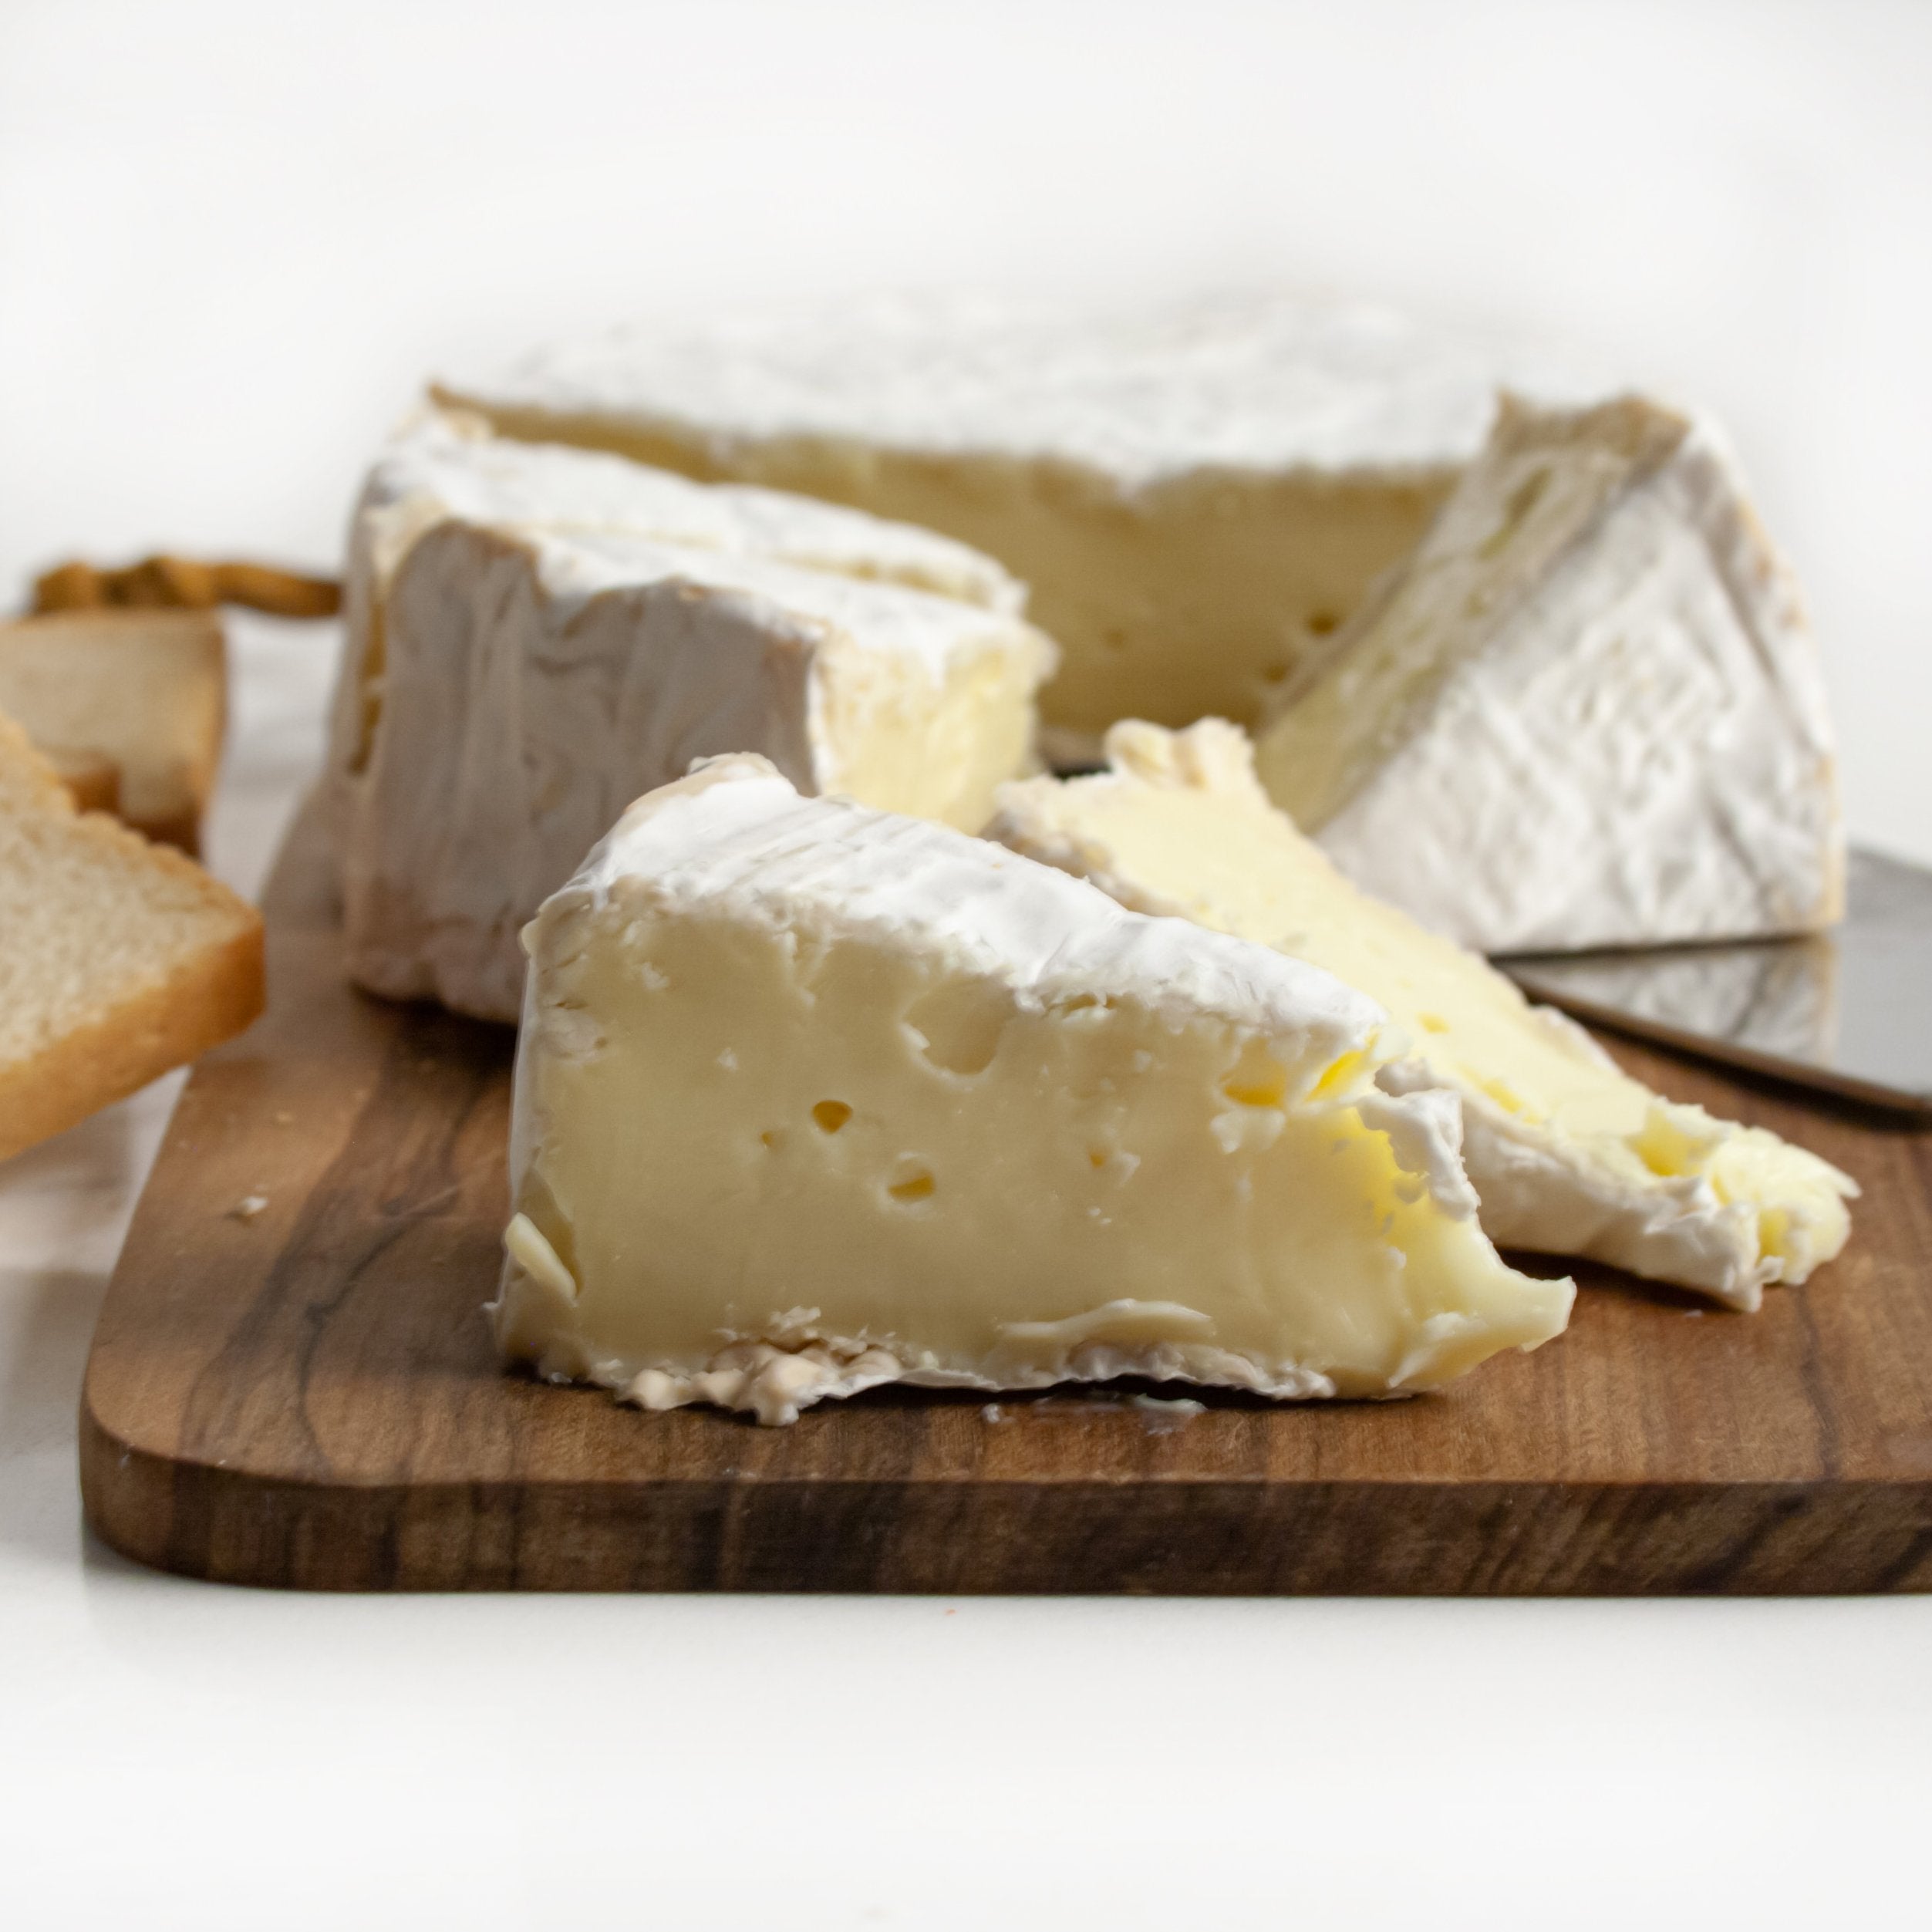 Camembert de Normandie: French raw-milk cheese